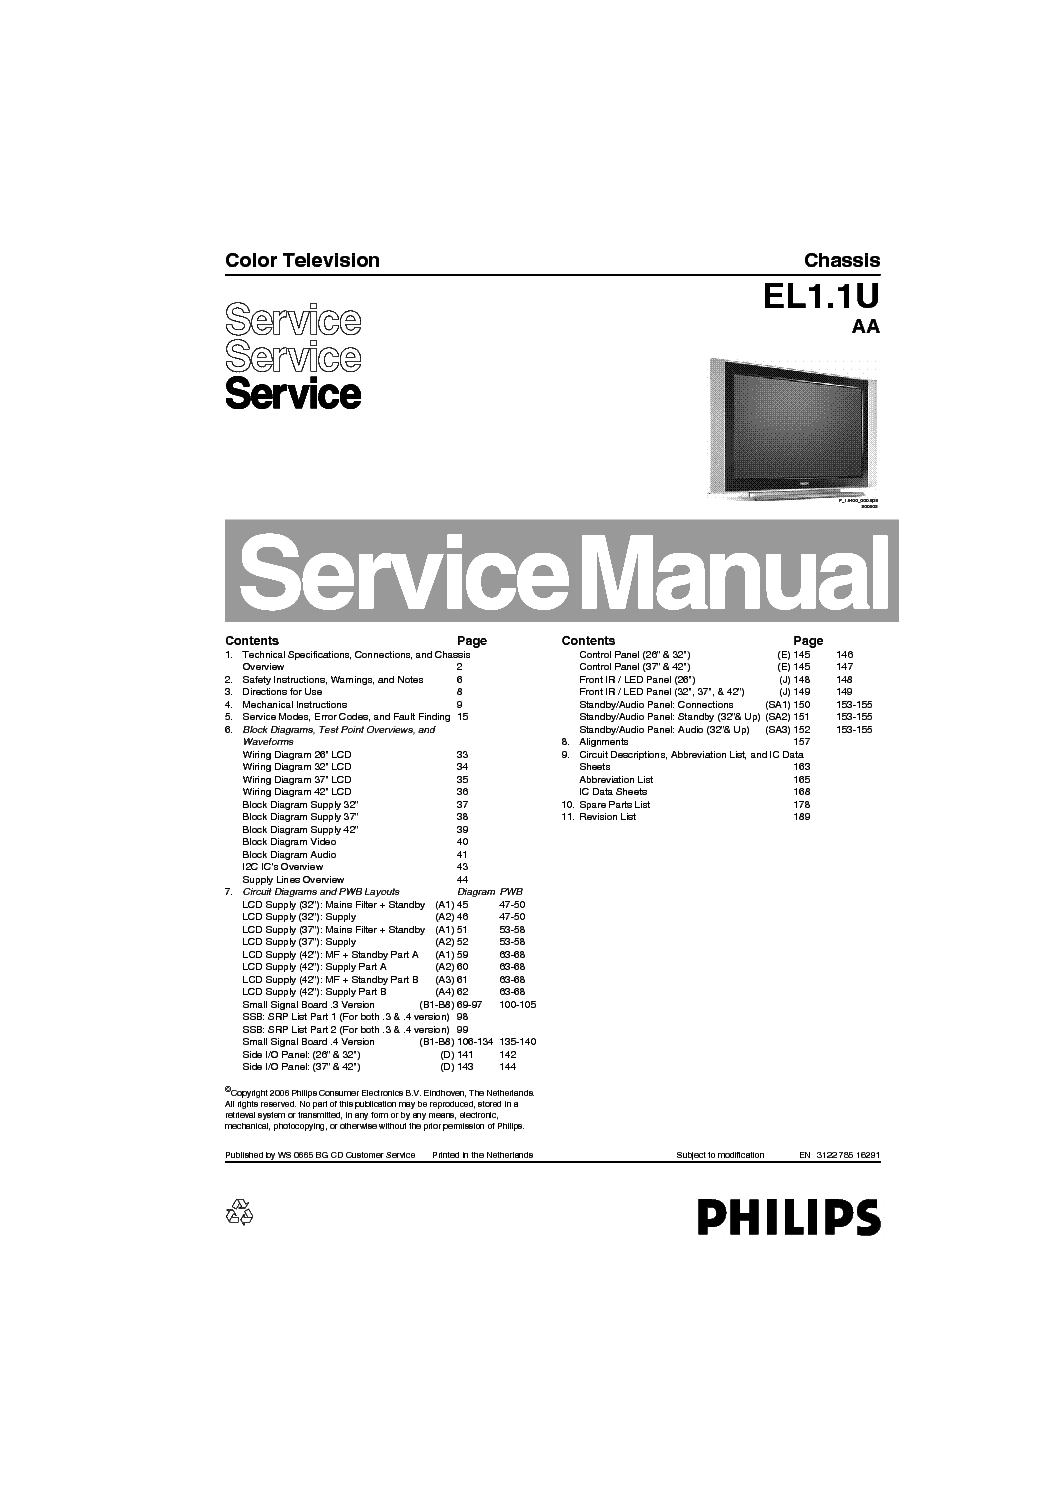 PHILIPS EL1.1U AA service manual (1st page)